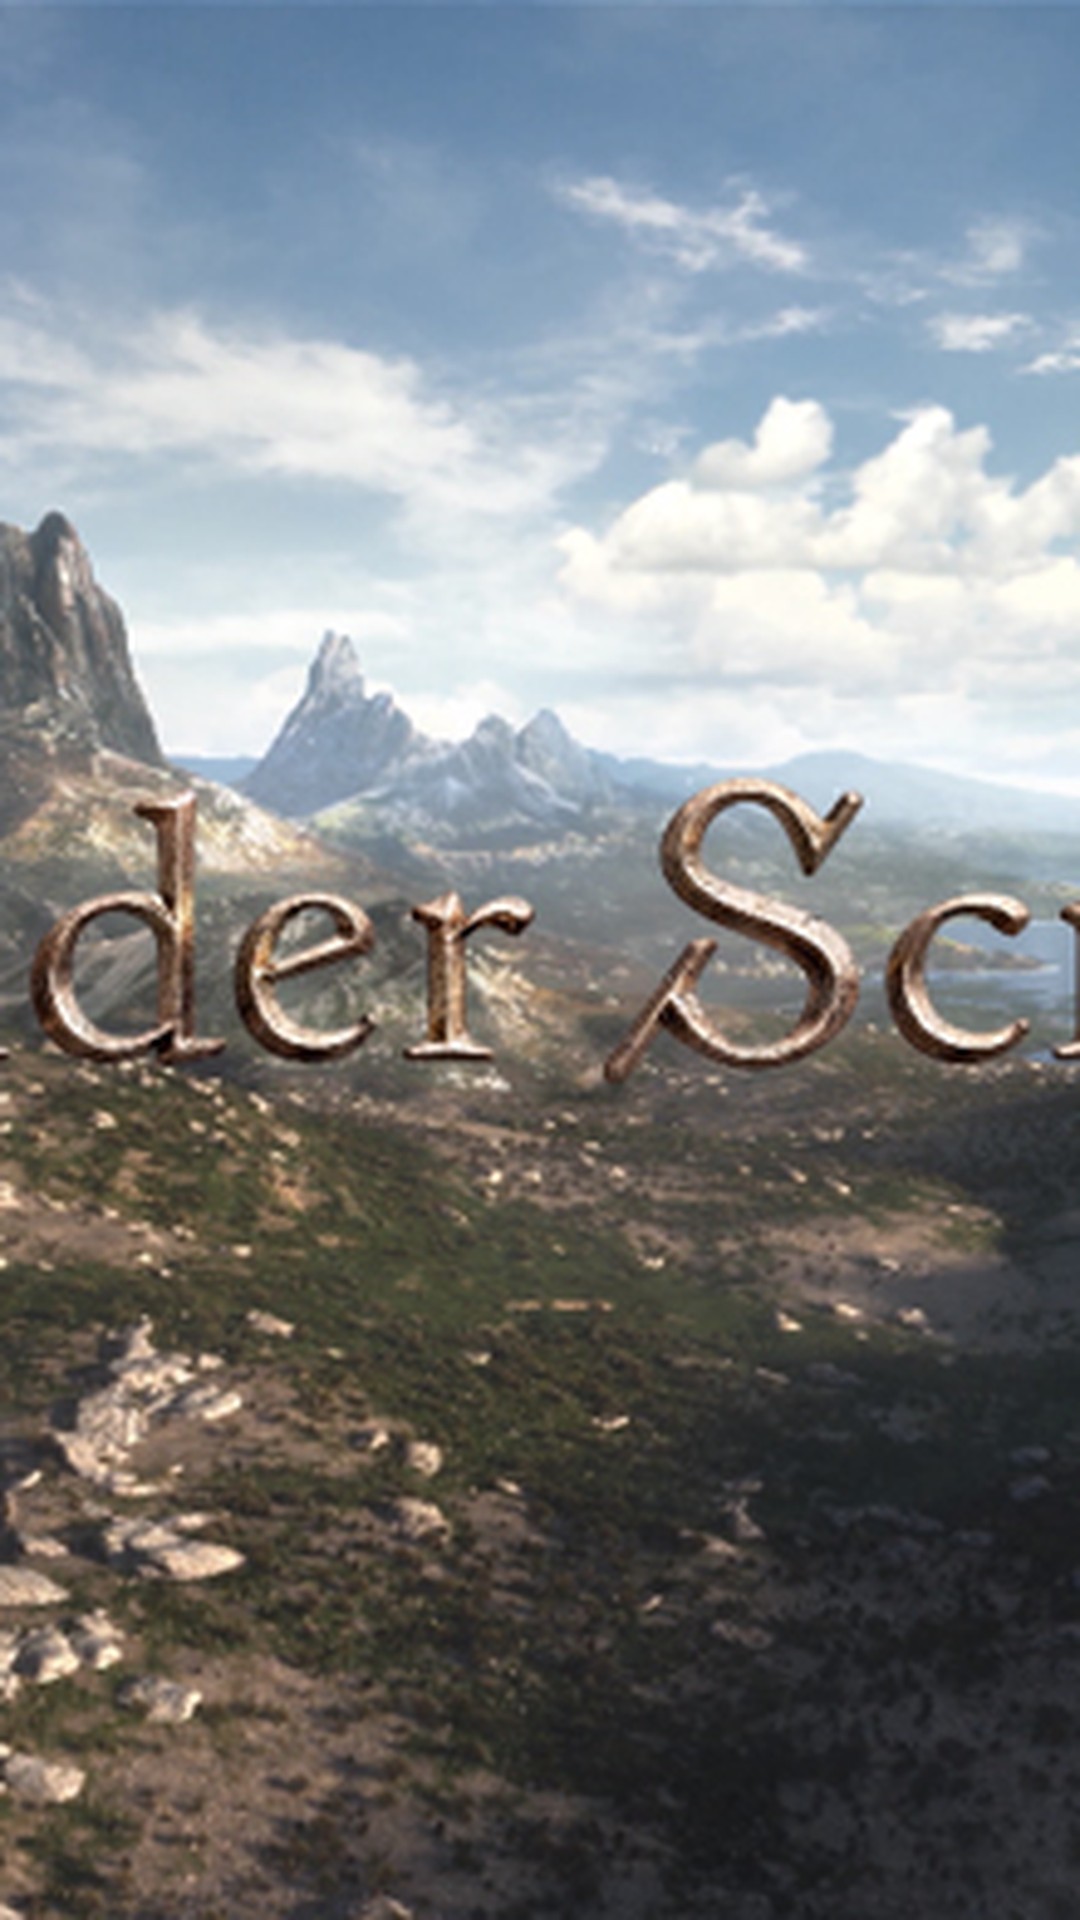 The Elder Scrolls 6, Software